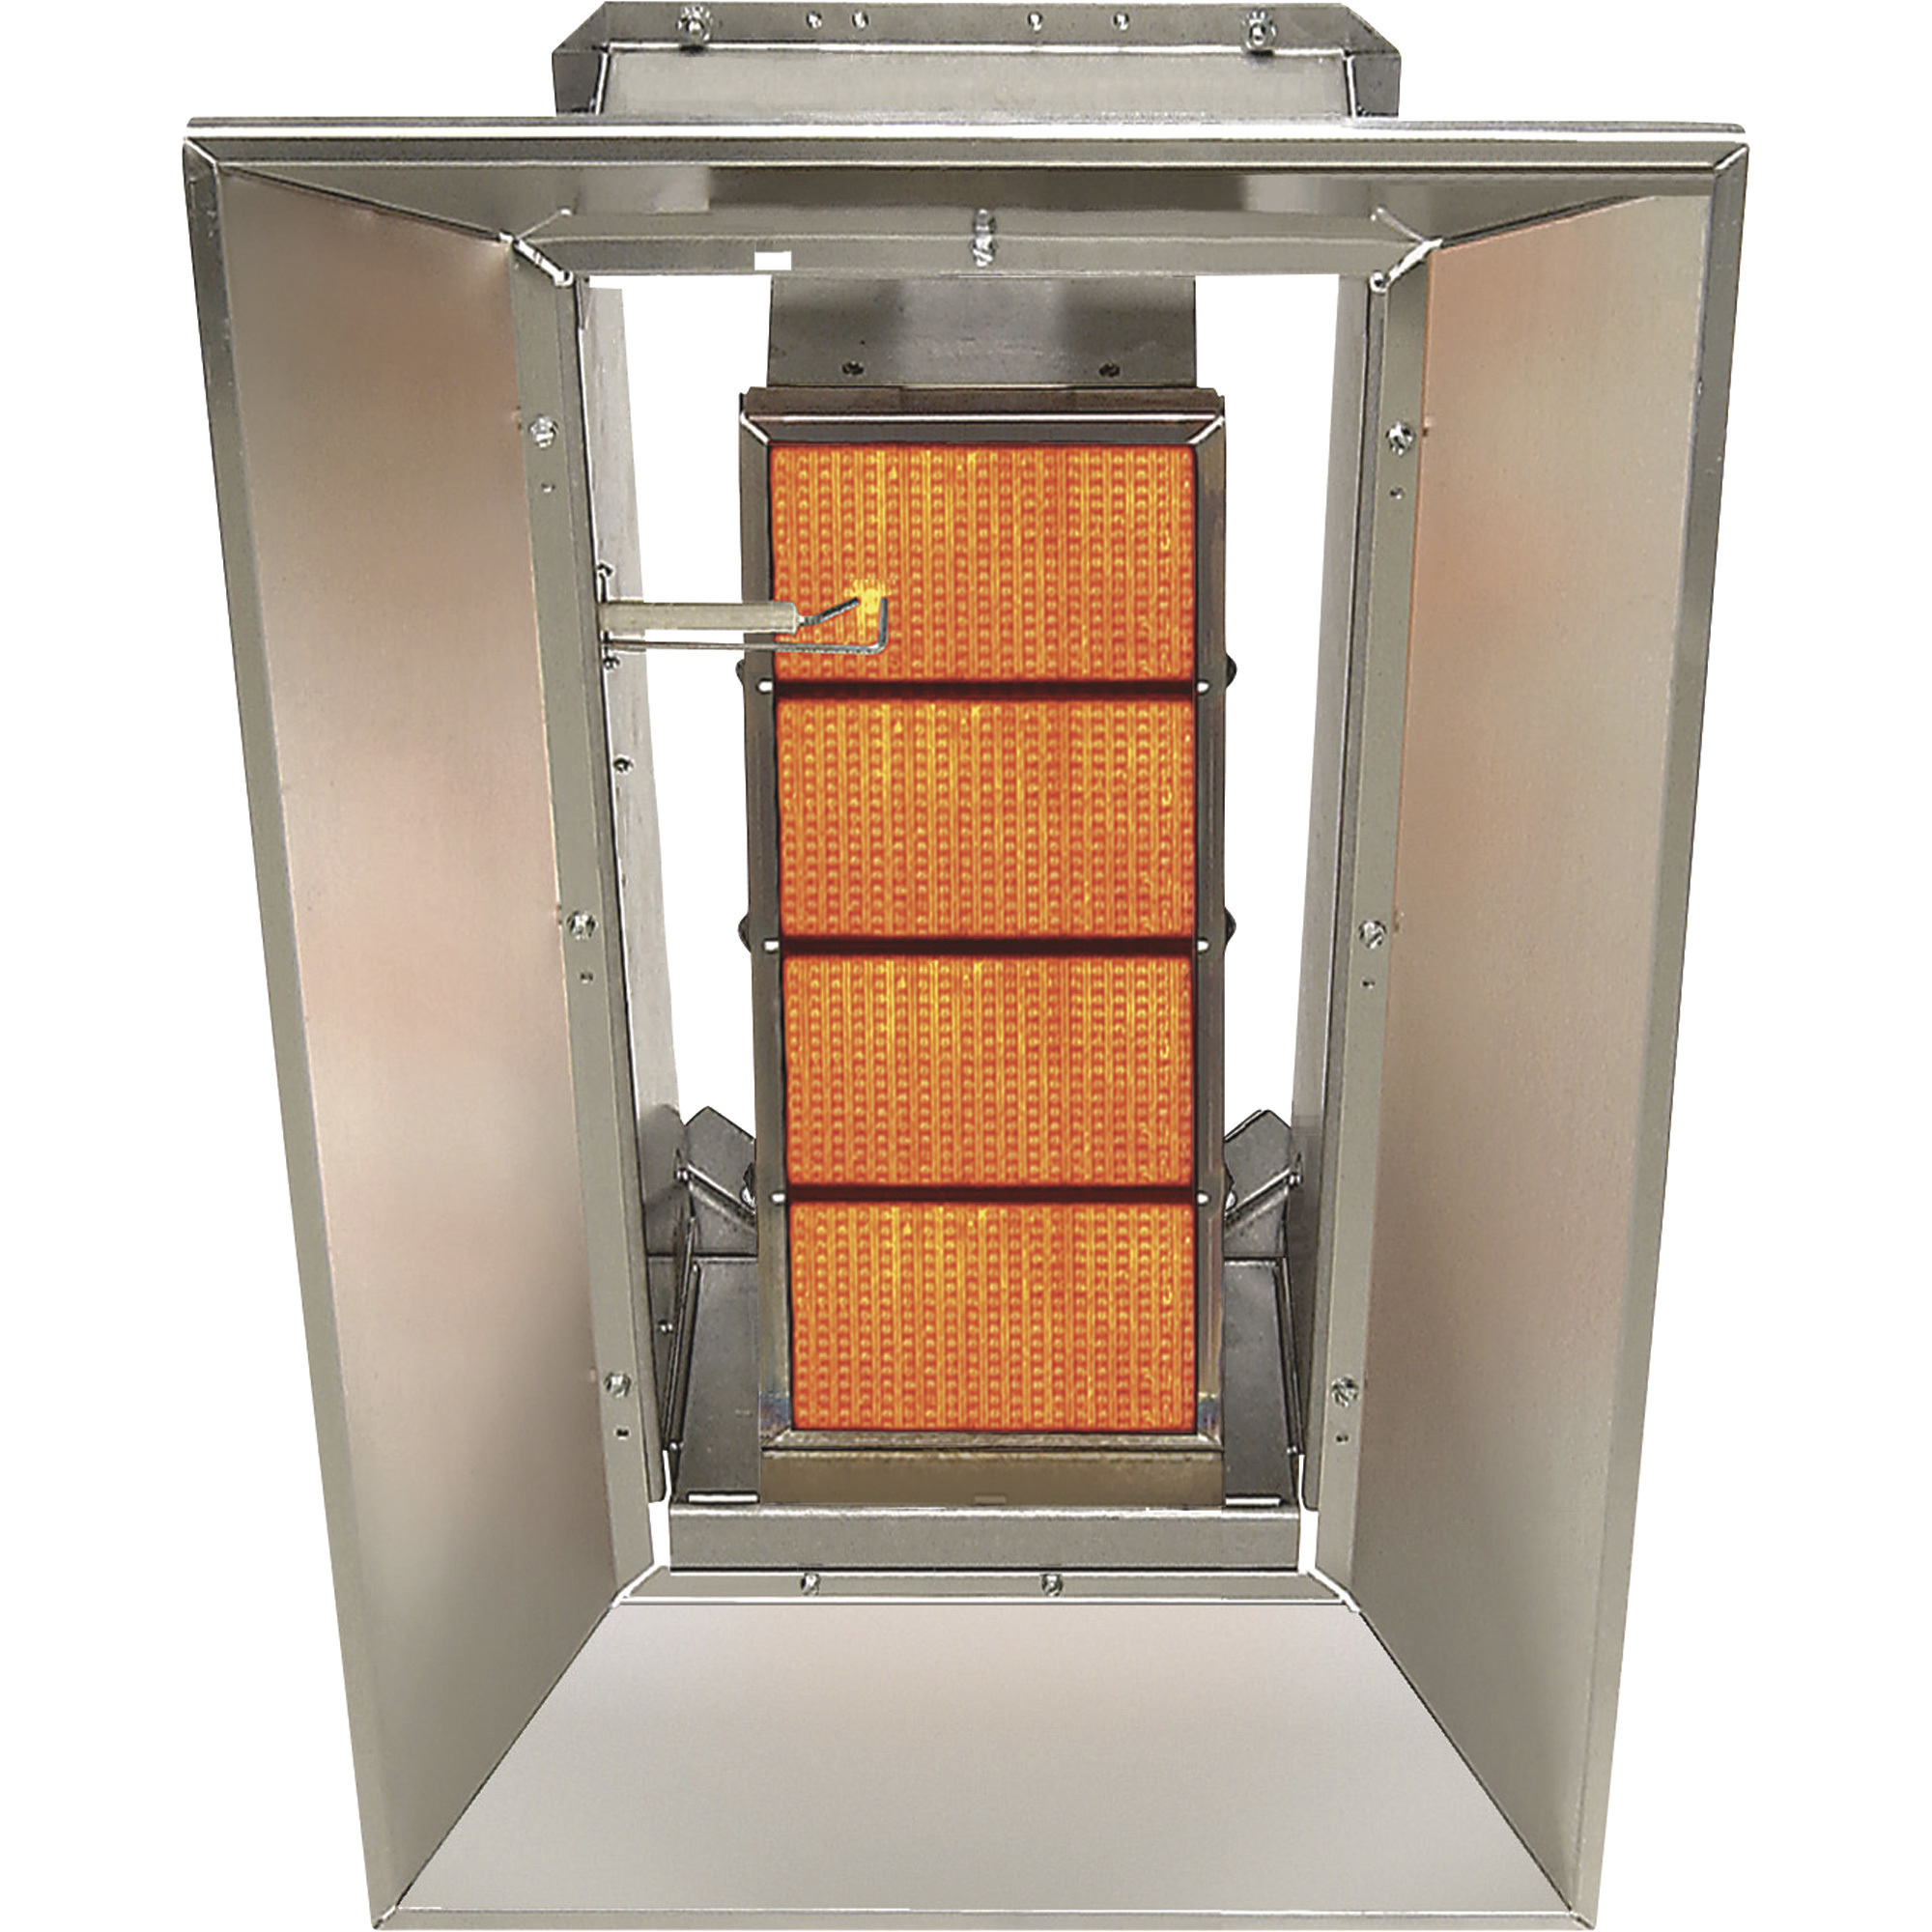 SunStar Heating Products Infrared Ceramic Heater, Natural Gas, 30,000 BTU, Model SG3-N